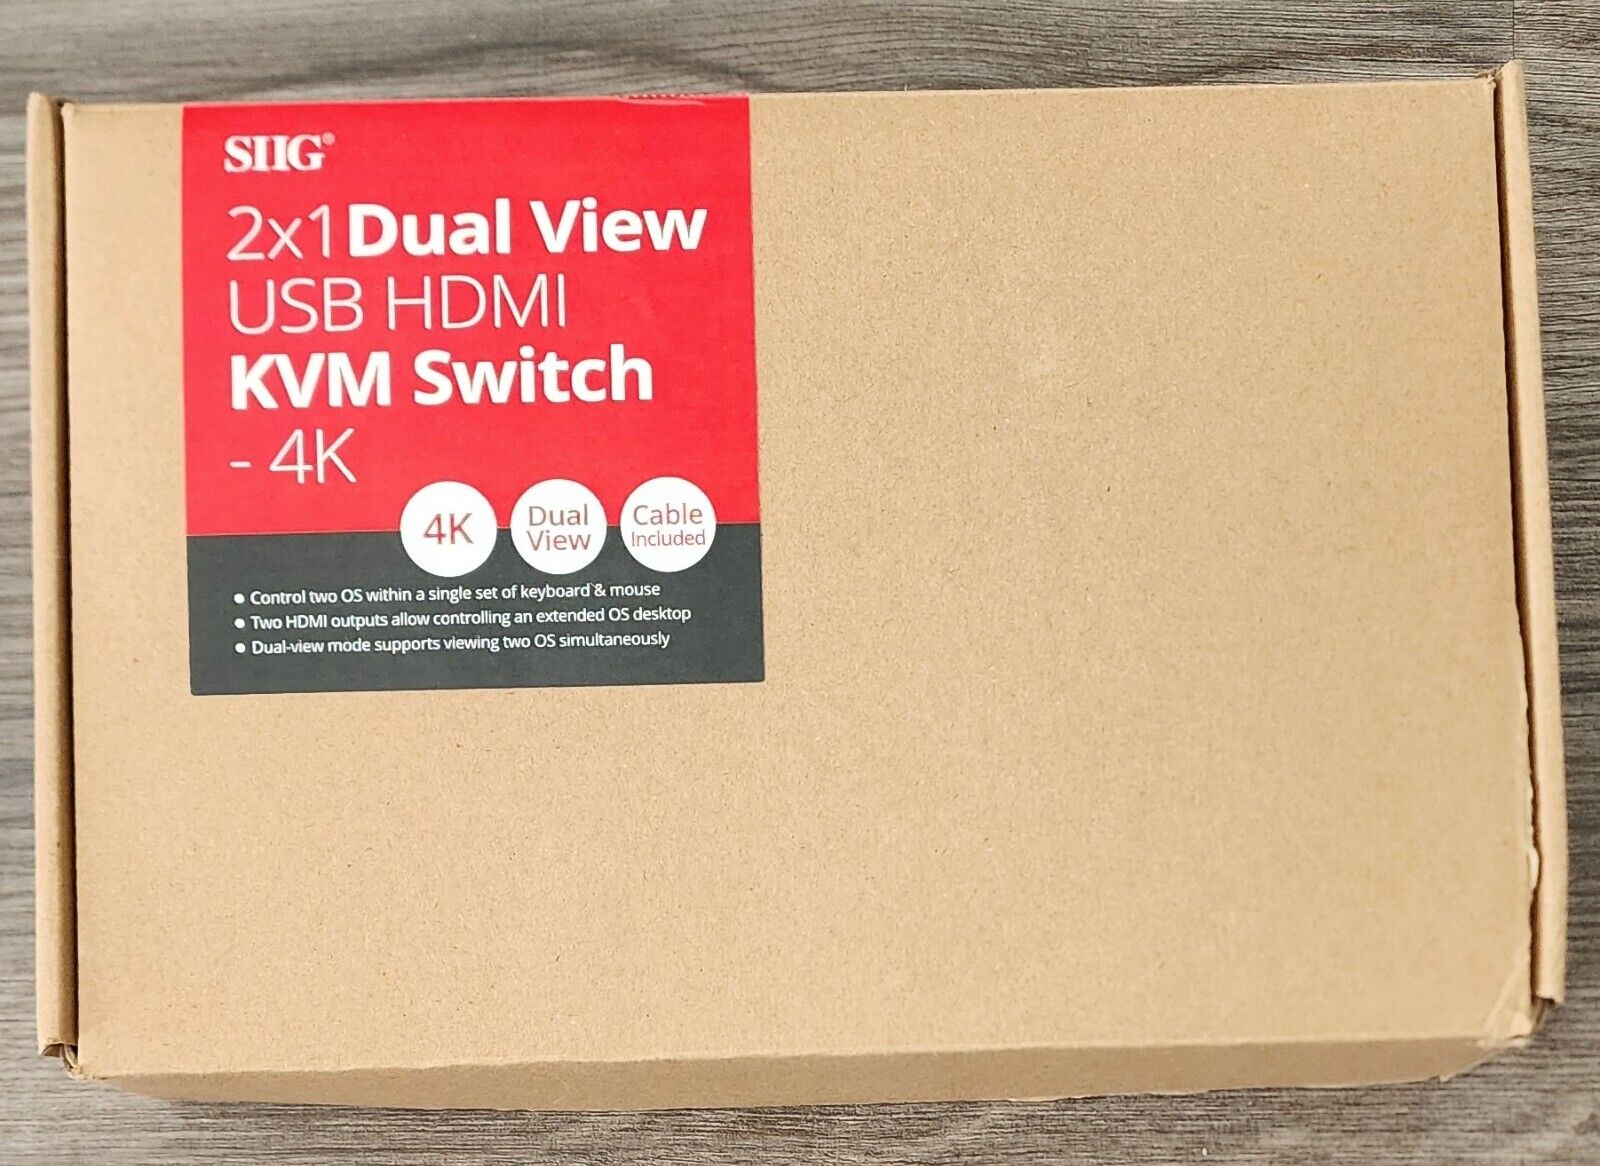 SIIG 2x1 Dual View USB HDMI KVM Switch - 4K, CE-KV0711-S1